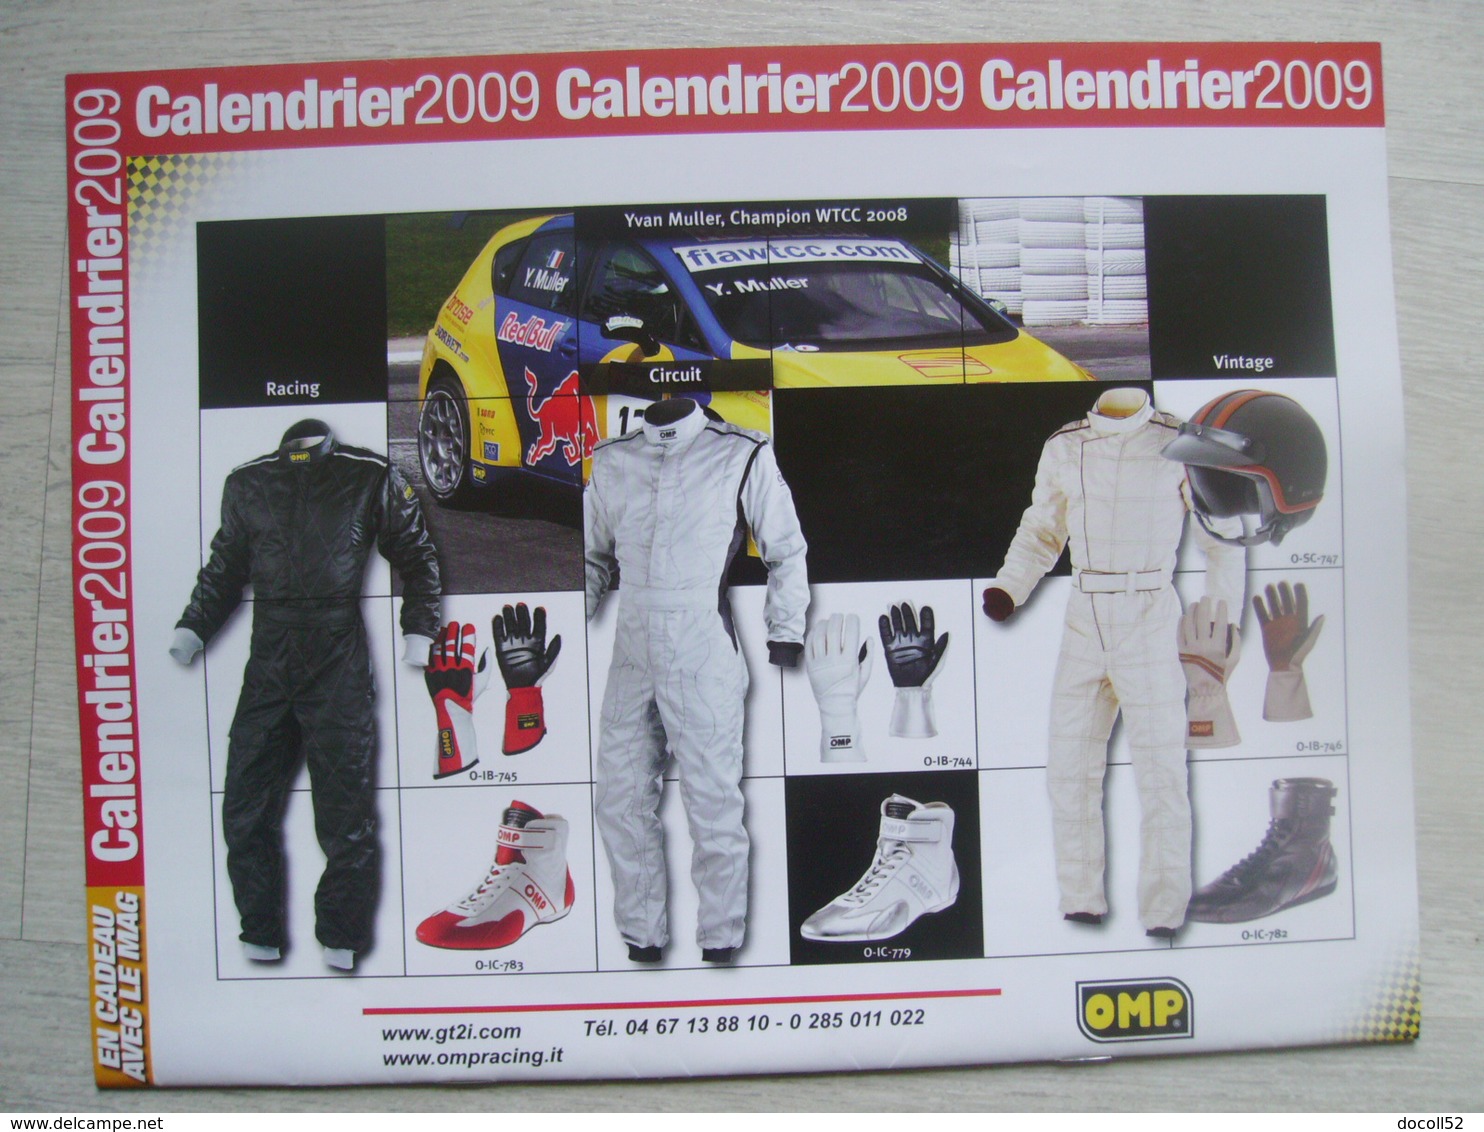 calendrier rallye 2009 rallyes magazine chapions du monde 2004,2005,2006,2007,2008 - sebastien loeb - D éléna - 9 scans